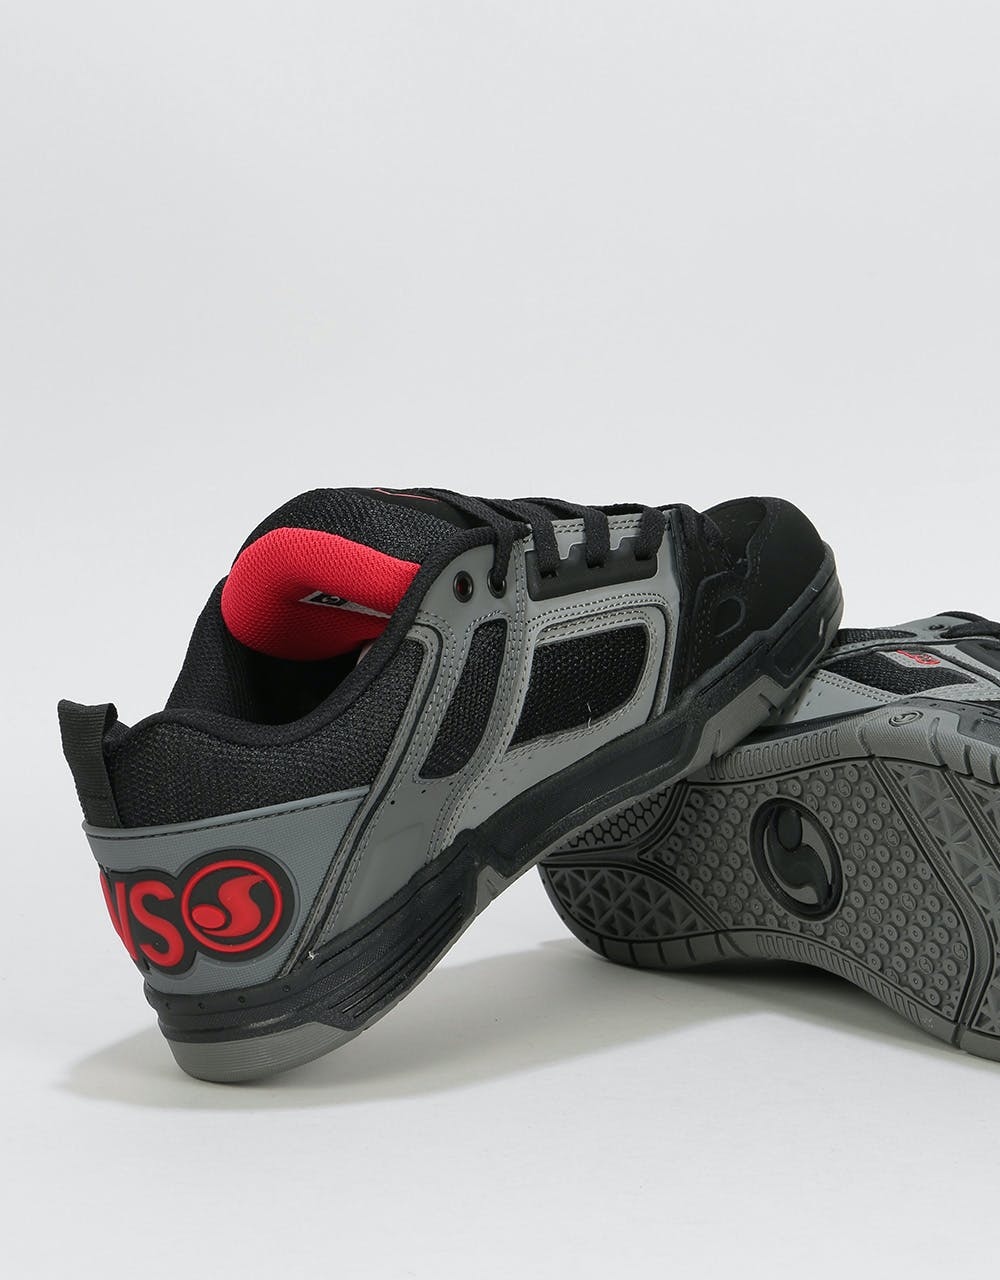 DVS Commanche Skate Shoes - Black/Charcoal/Red Nubuck